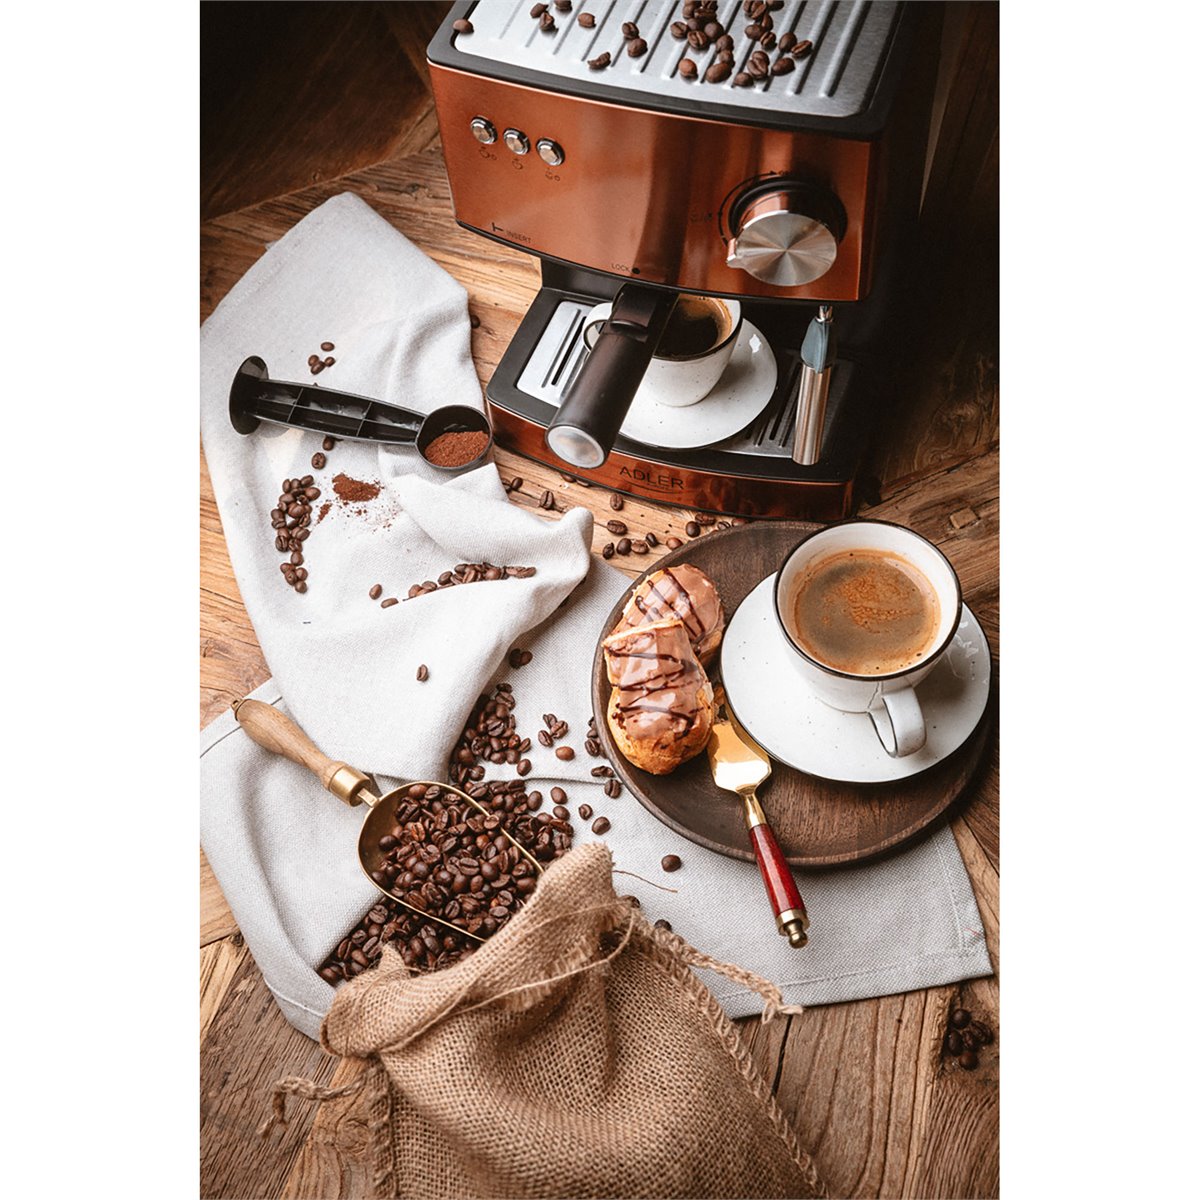 Mesko MS 4409 Cafetera Espresso Manual 15 Bares, Depósito 1,5 L